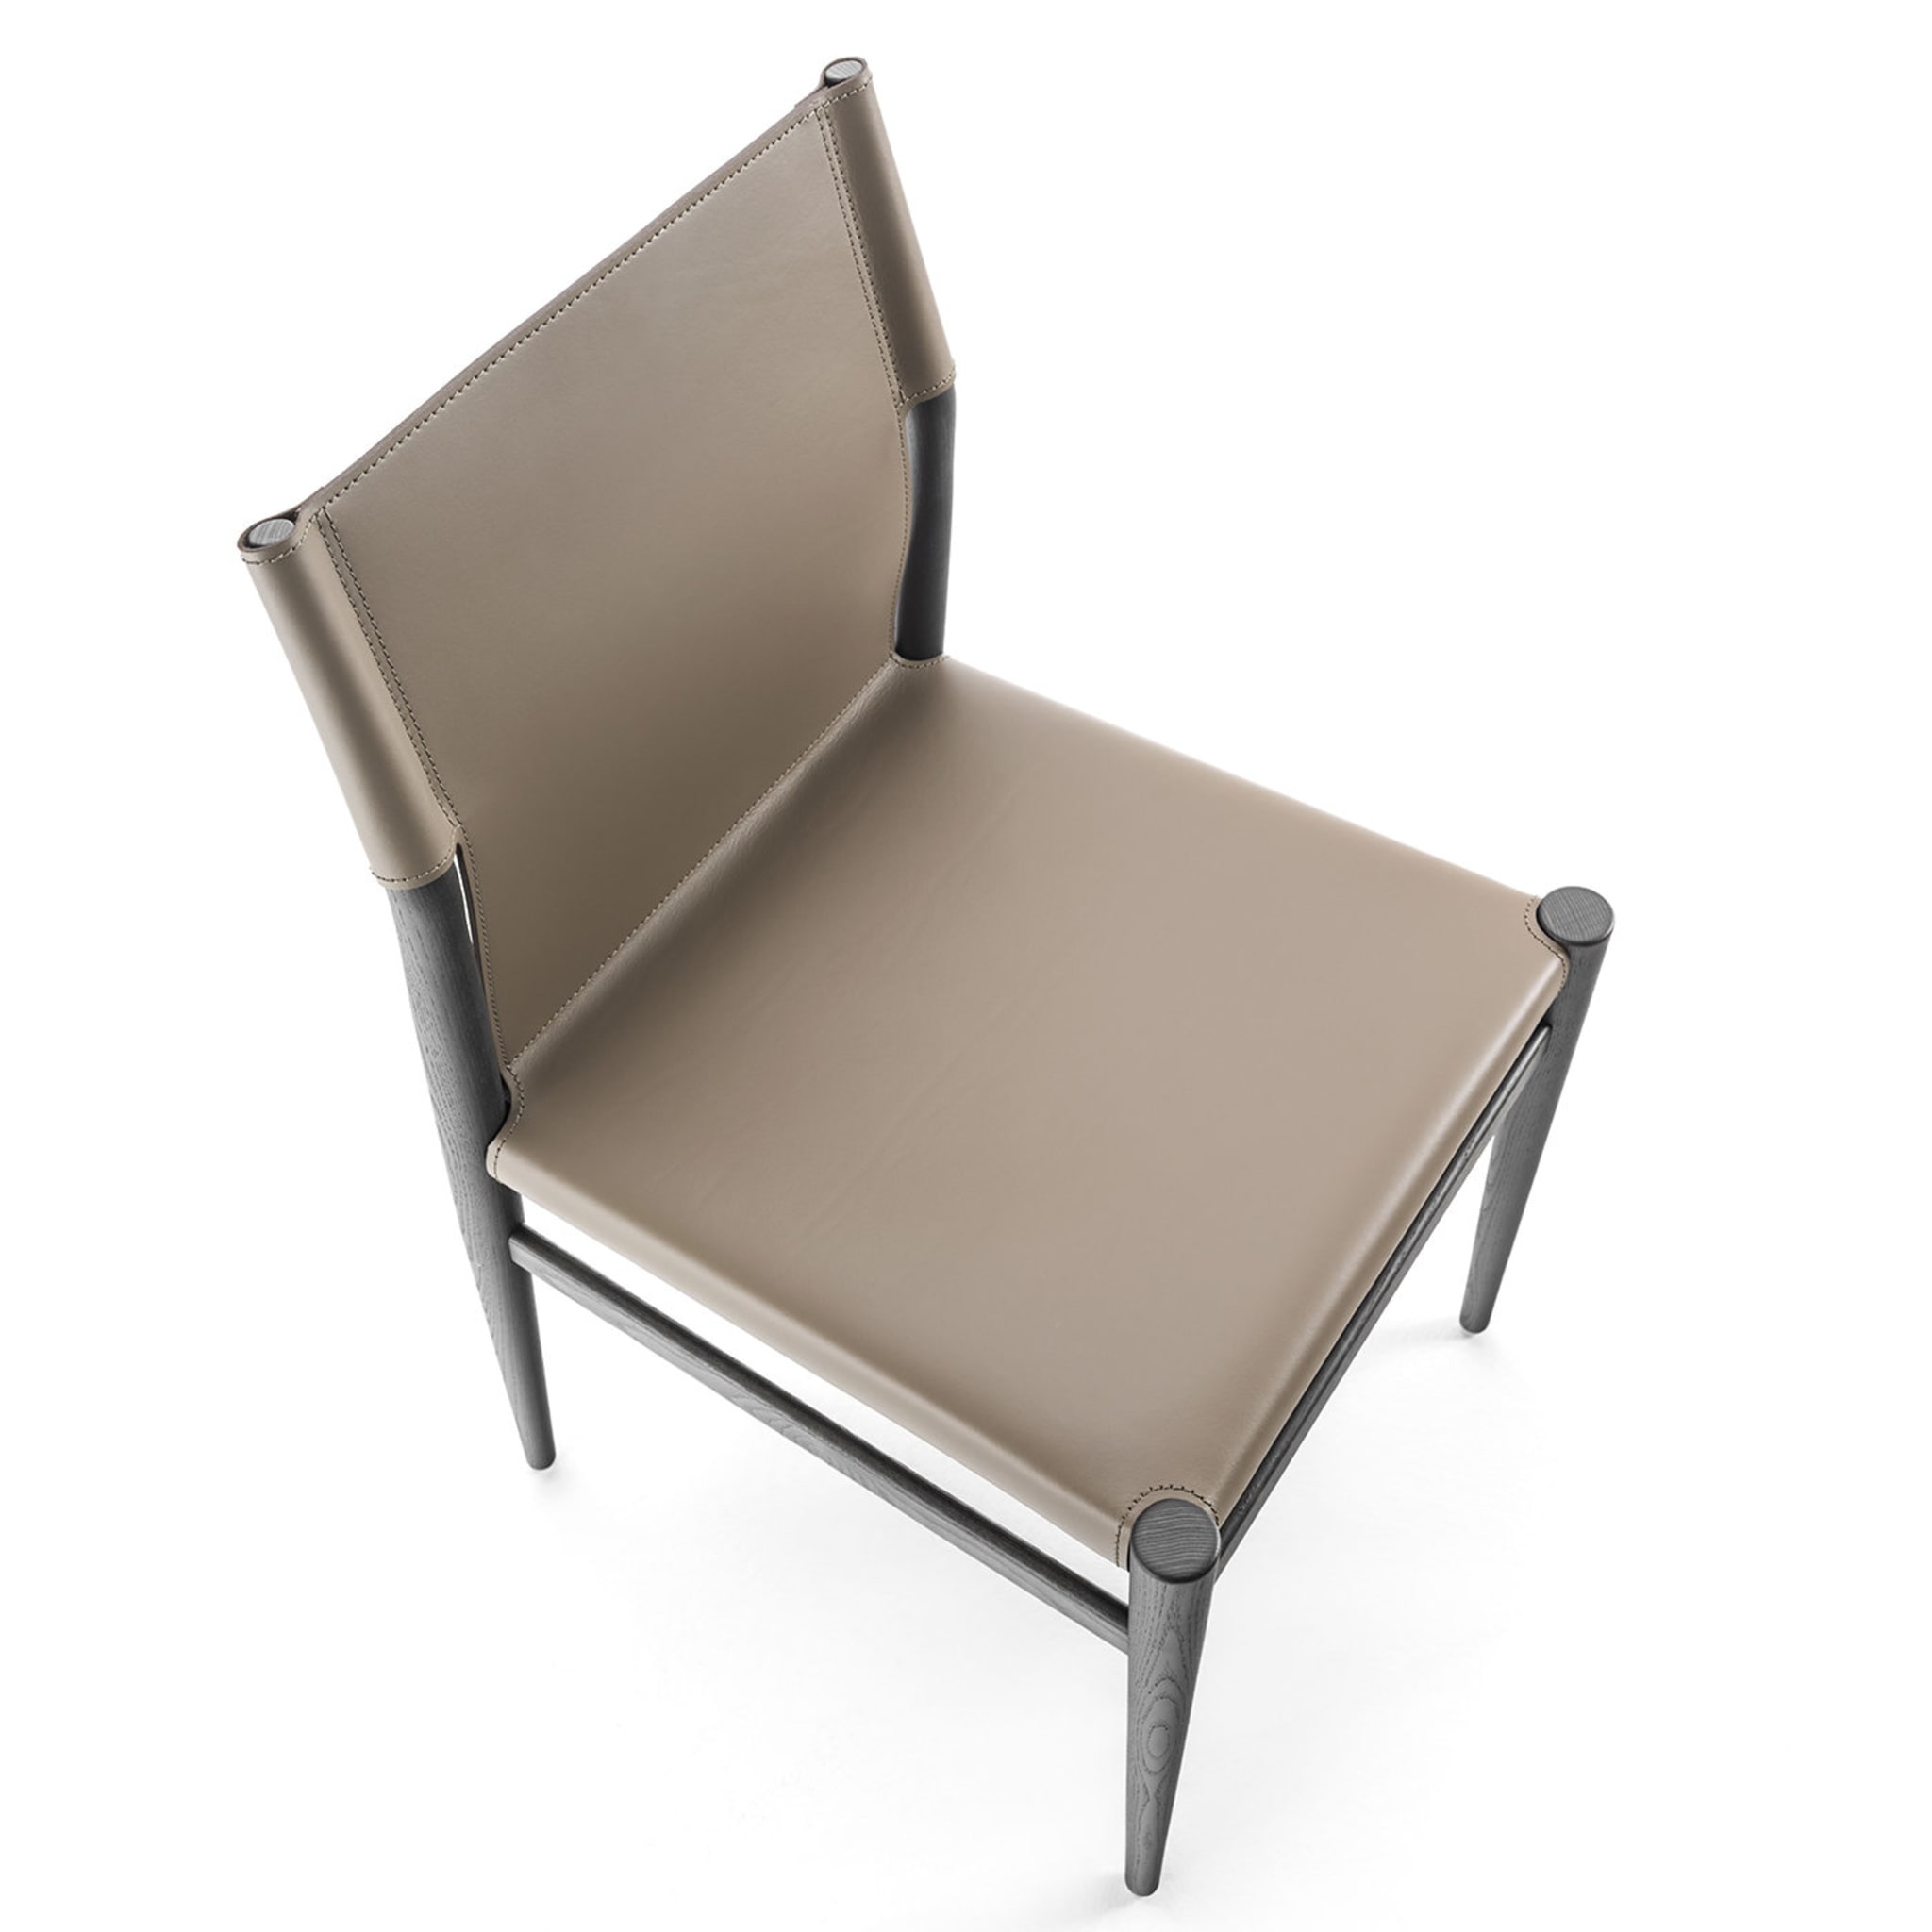 Ledermann Chair #2 by Tom Kelley - Alternative view 2